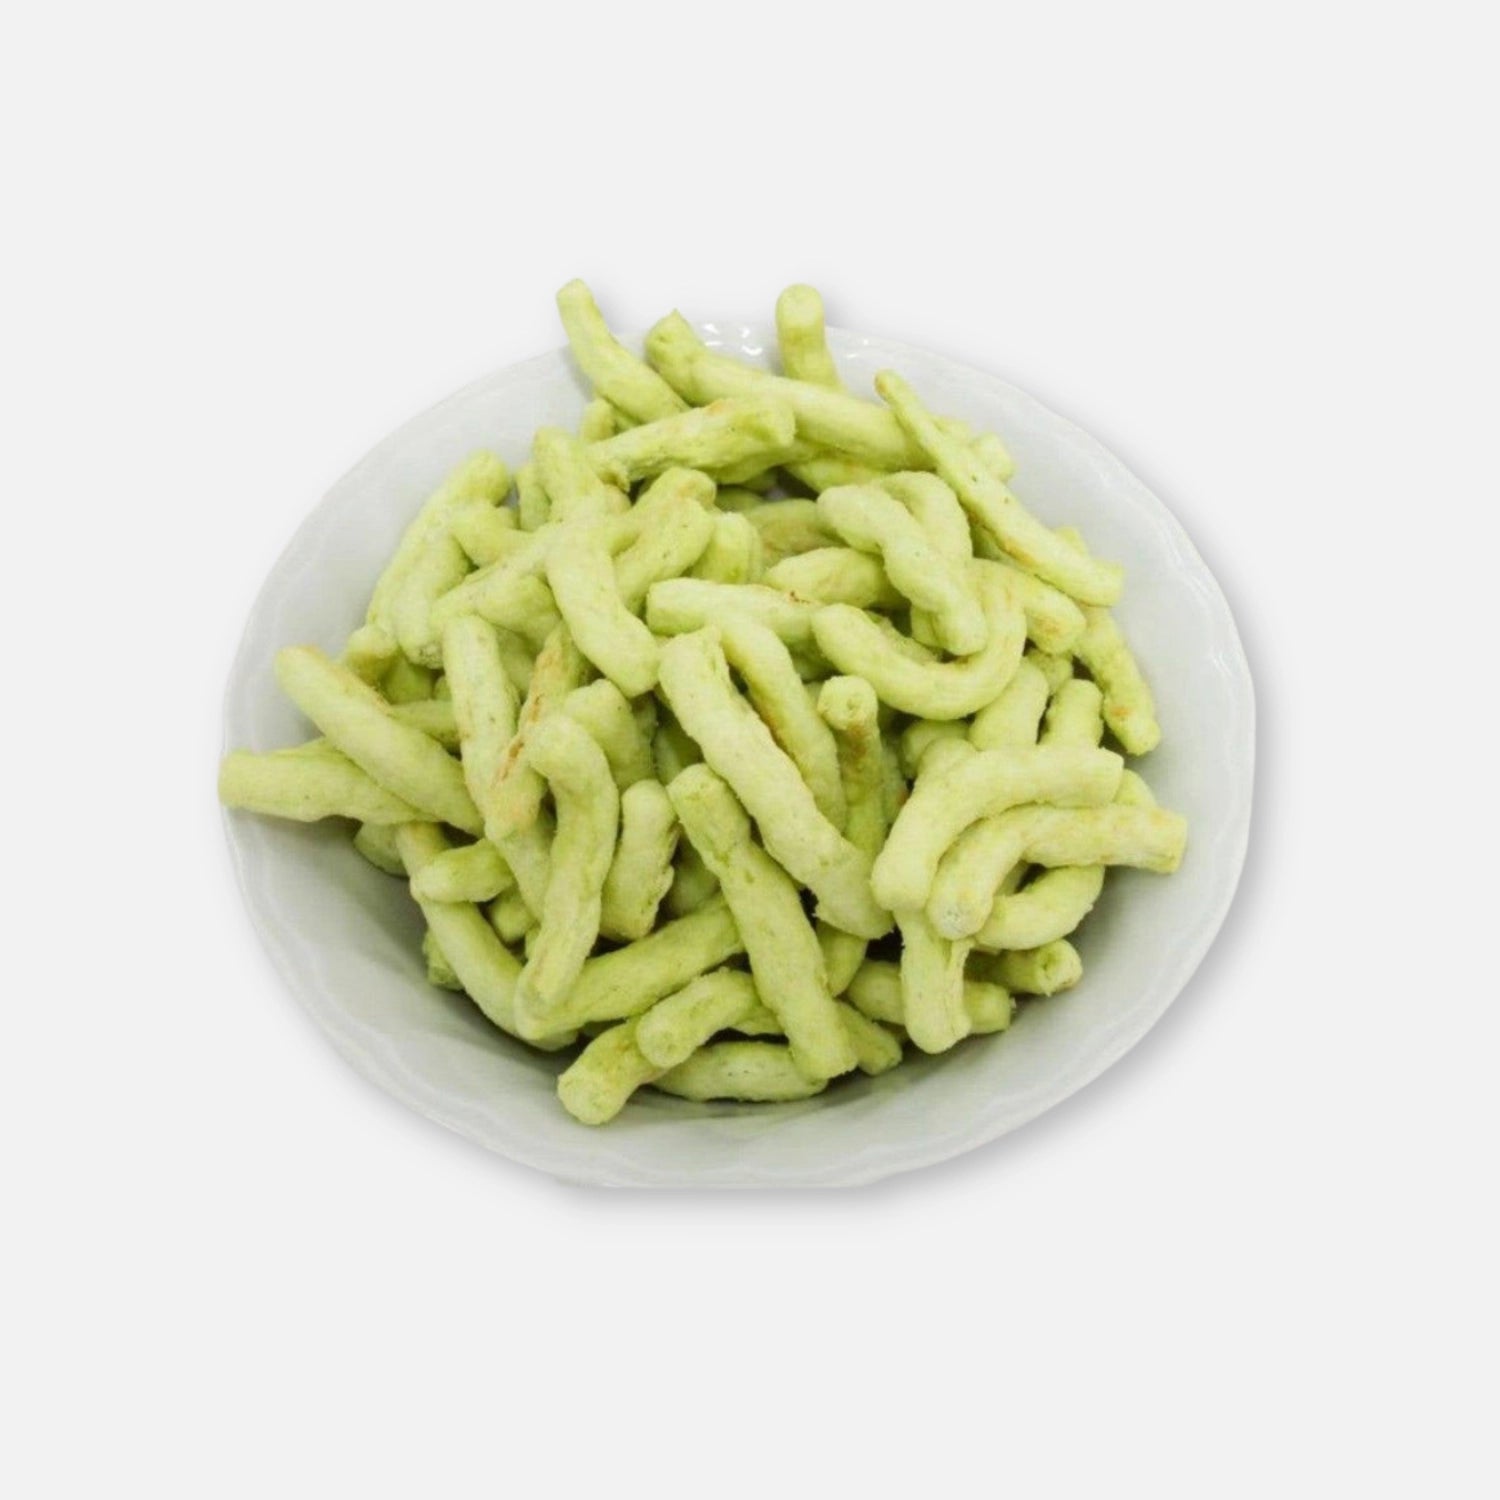 Tohato Bino 100% Roasted Green Peas Corn Snack 61g - Buy Me Japan